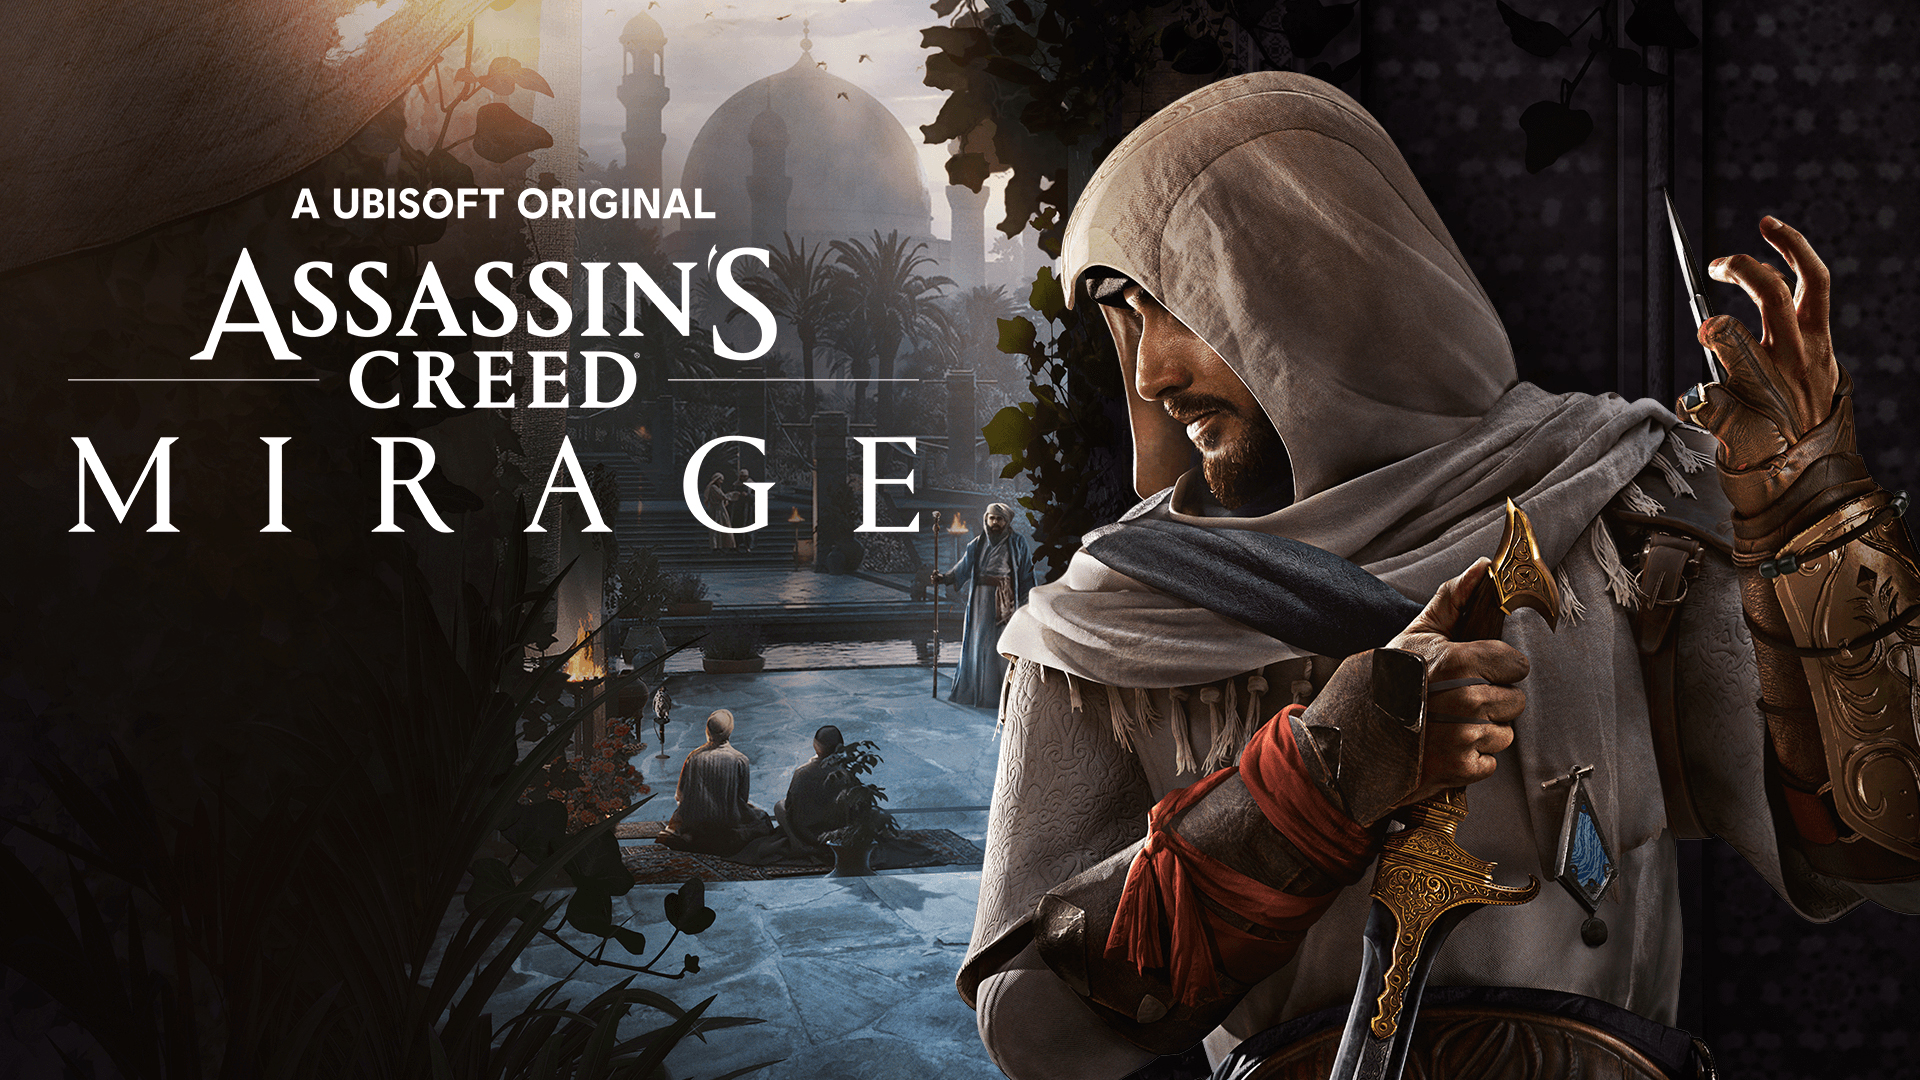 Assassin's Creed Mirage art